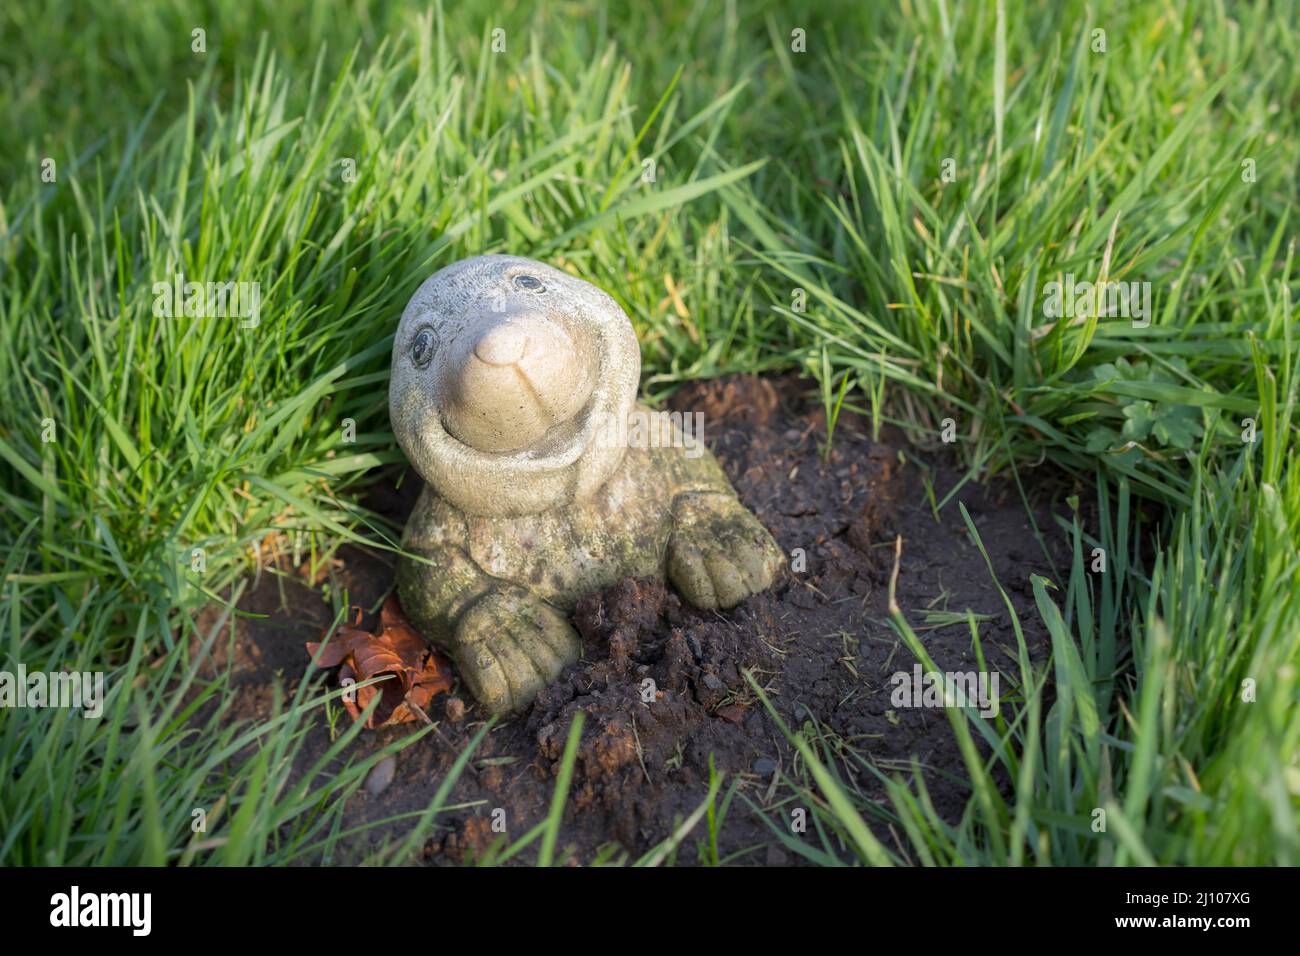 Cute, smiling mole garden ornament on grass, outdoors near evidence of a lawn molehill, UK. Stock Photo